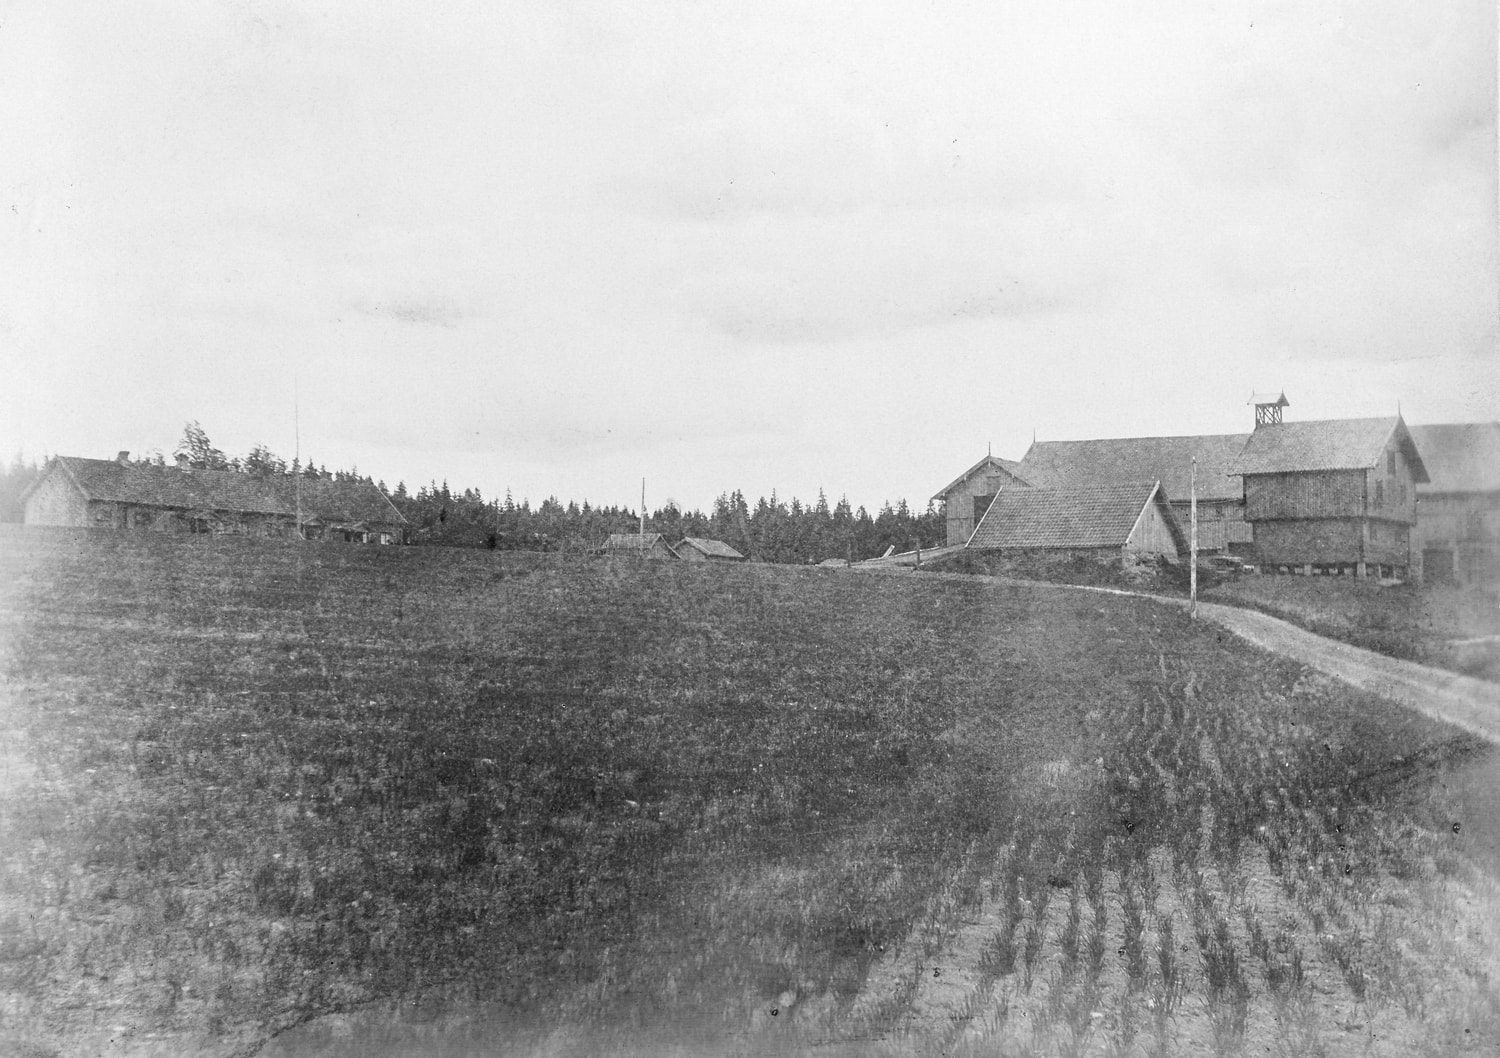  Dyster gård, 1901 